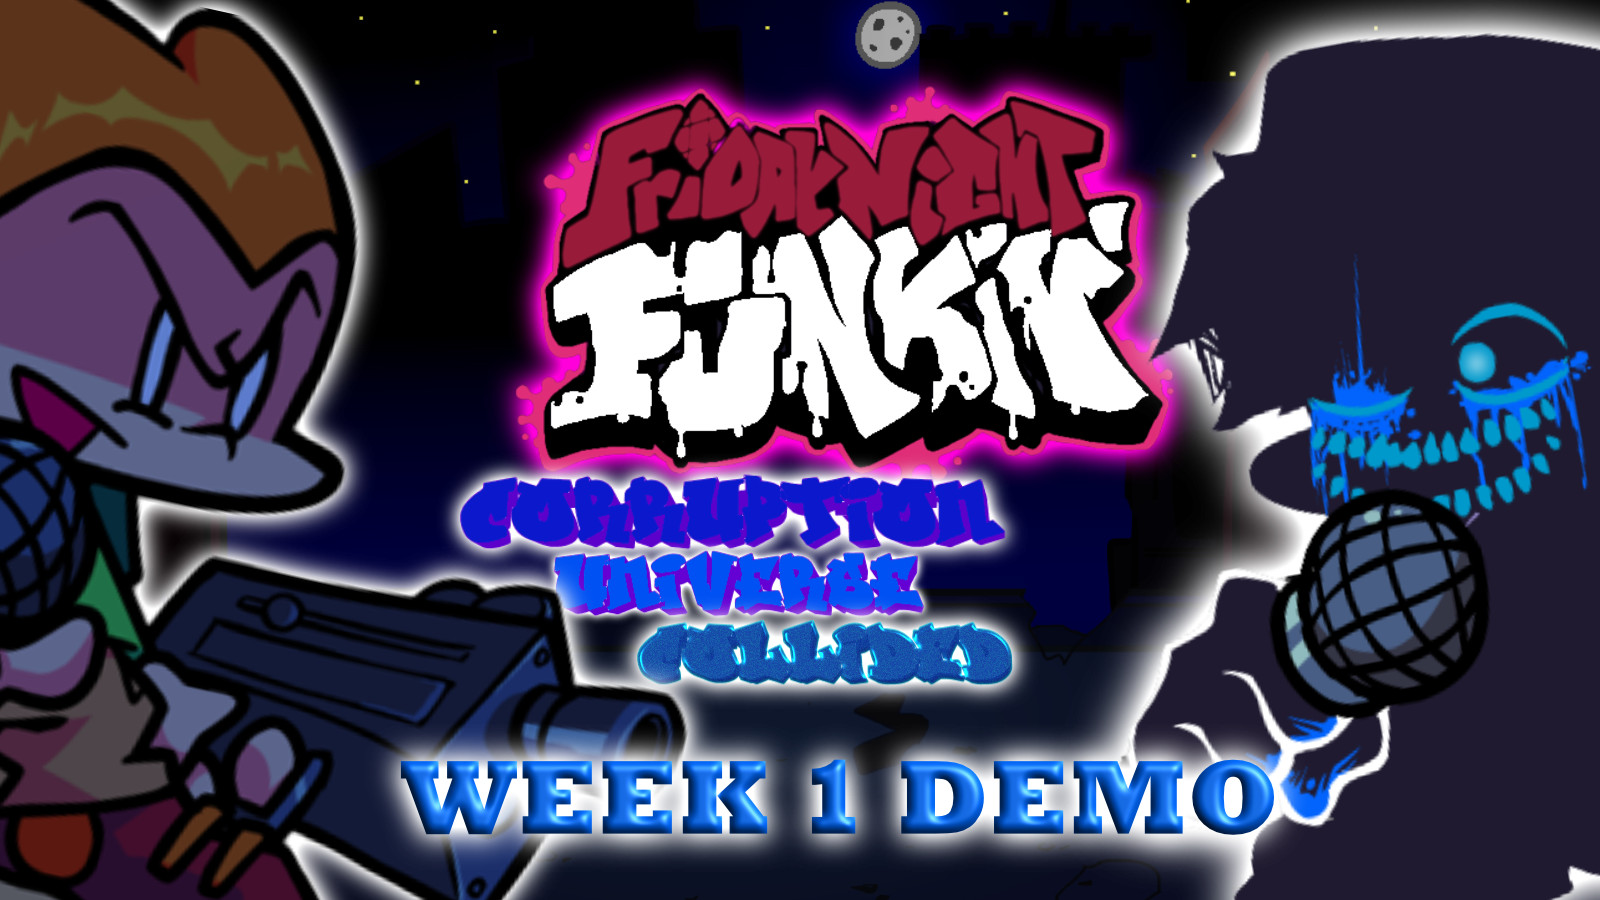 Corrupted Night [Demo] [Friday Night Funkin'] [Mods]